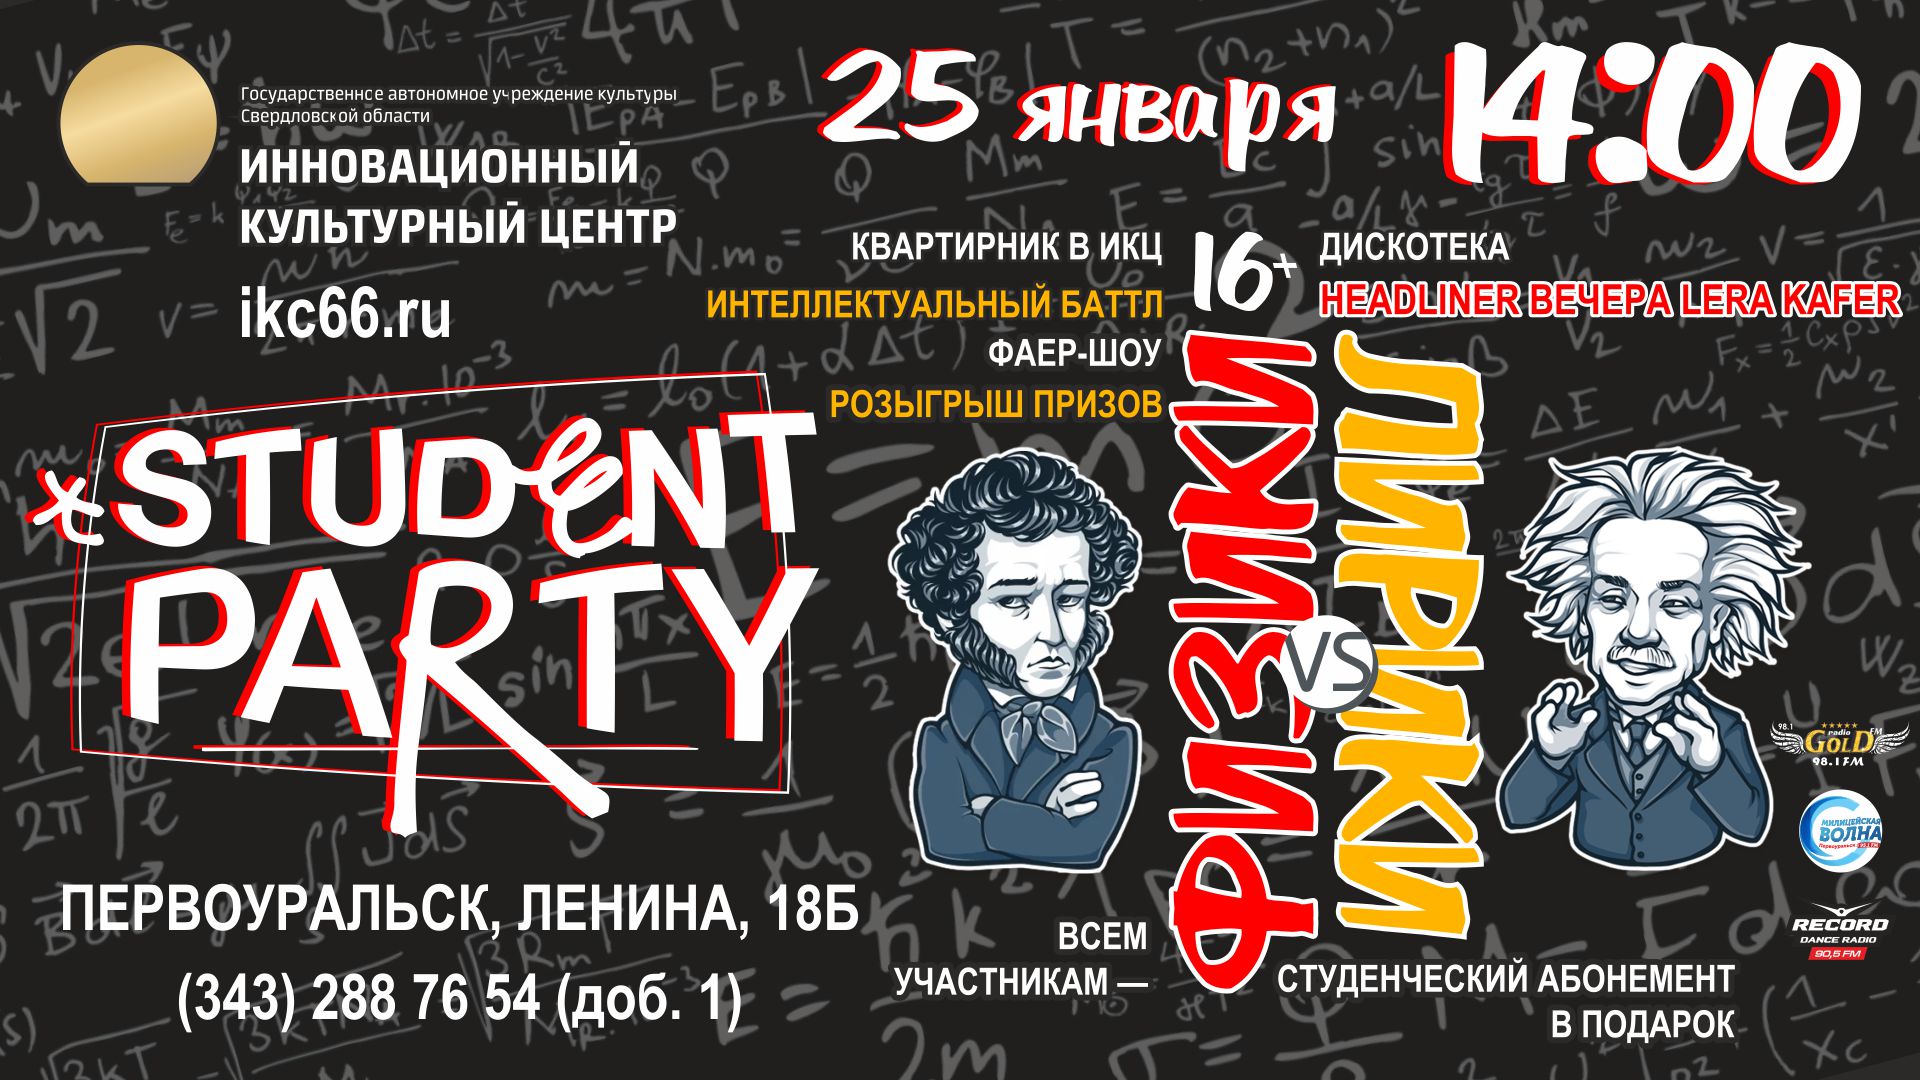 25 января STUDENT PARTY. Программа